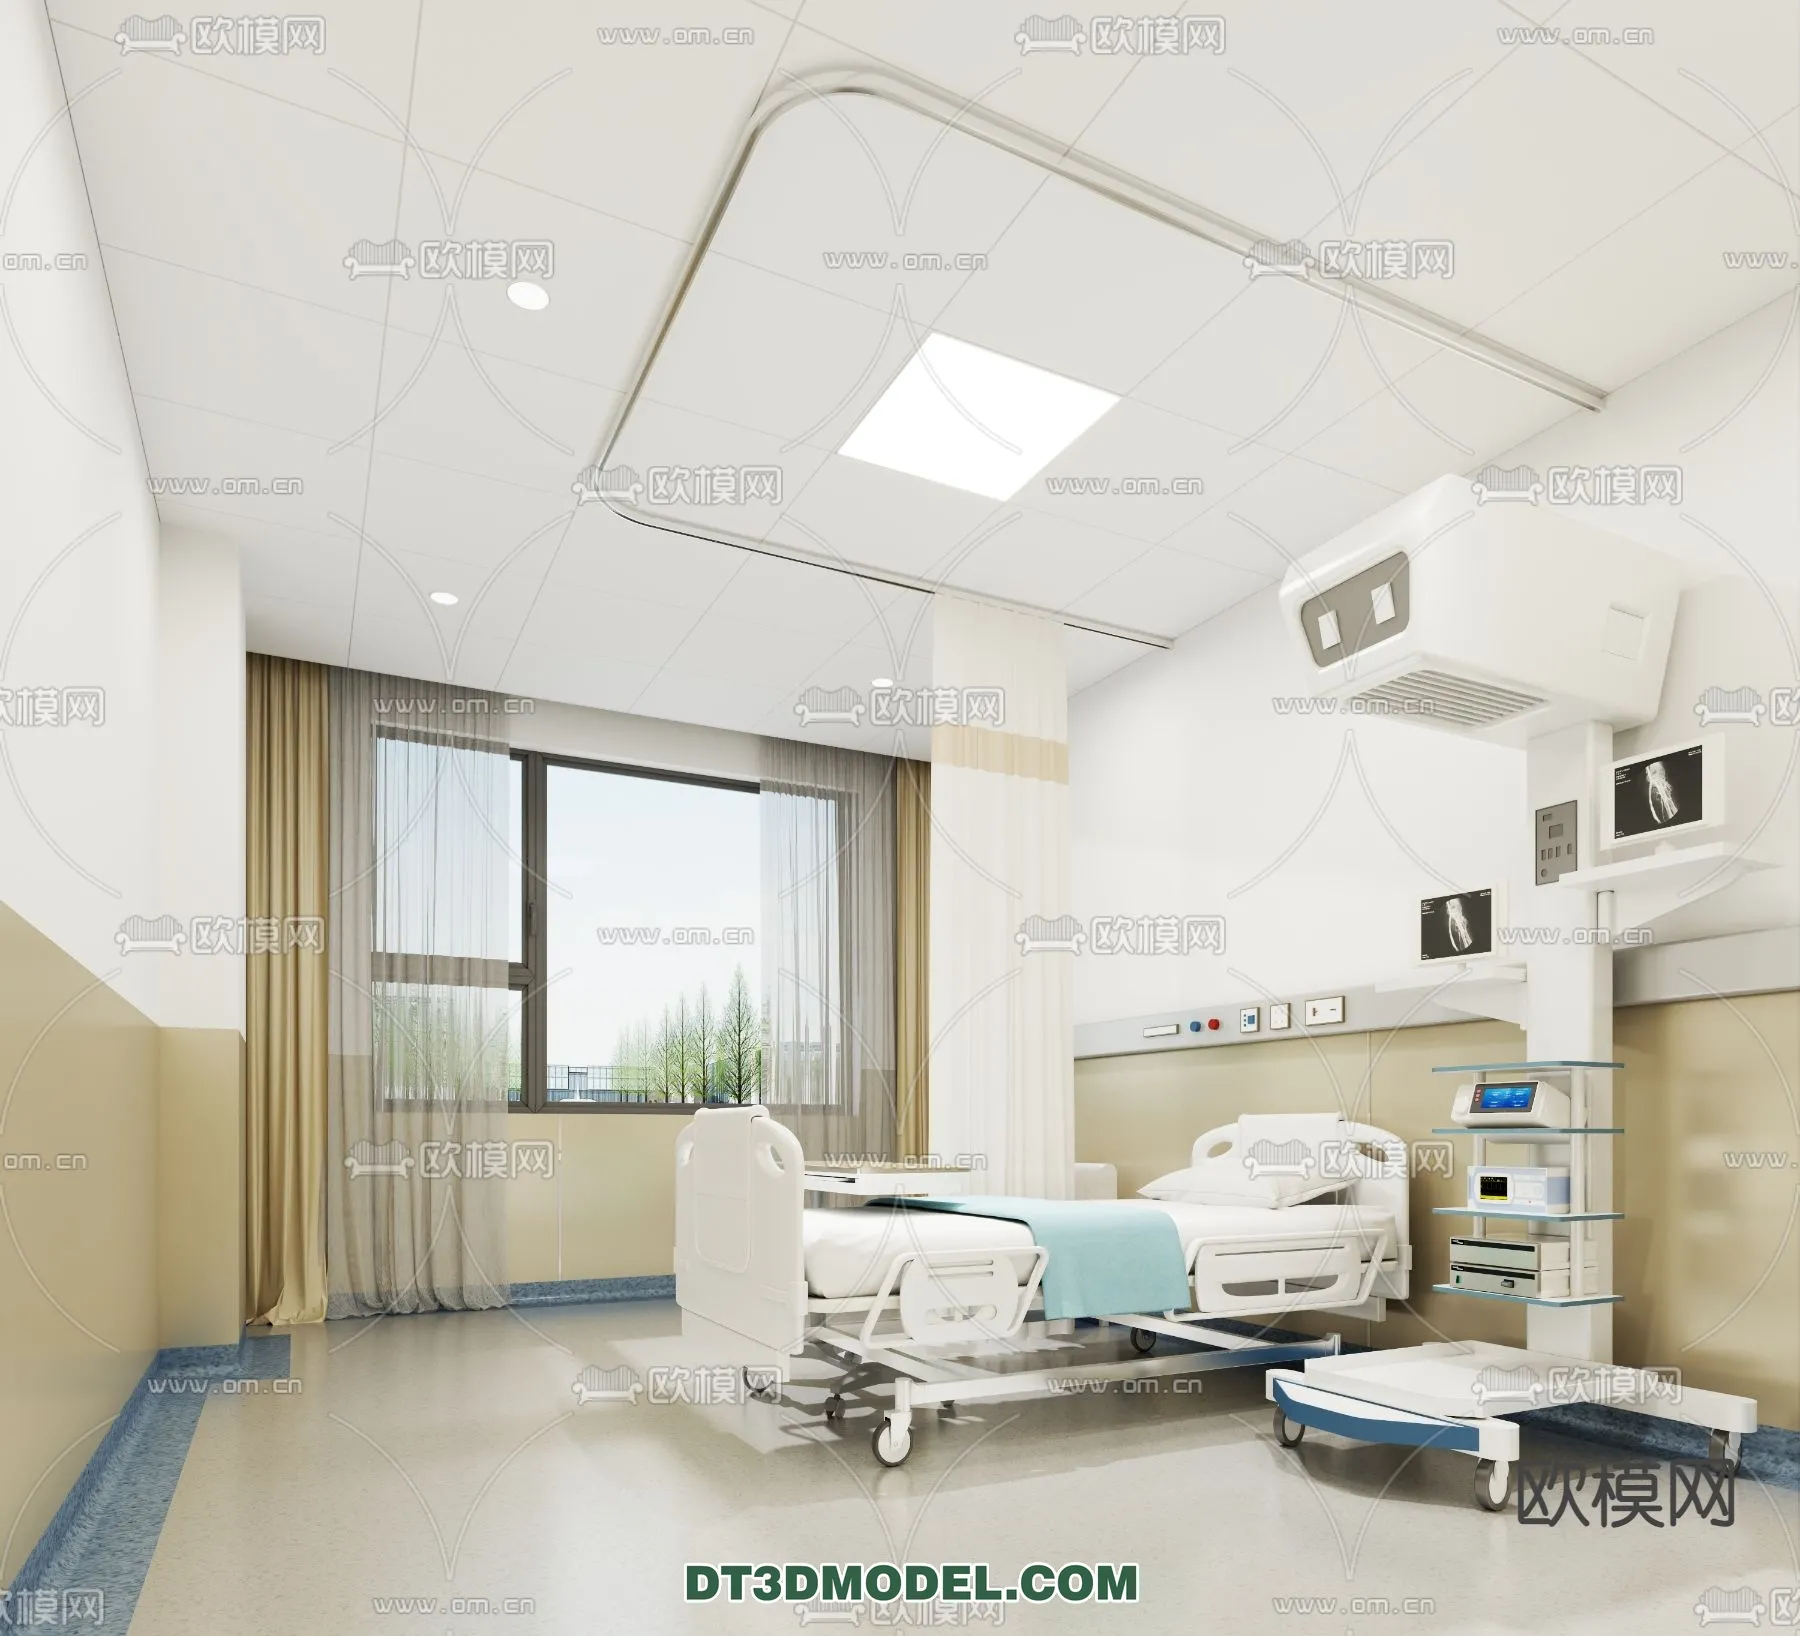 HOSPITAL 3D SCENES – MODERN – 0136